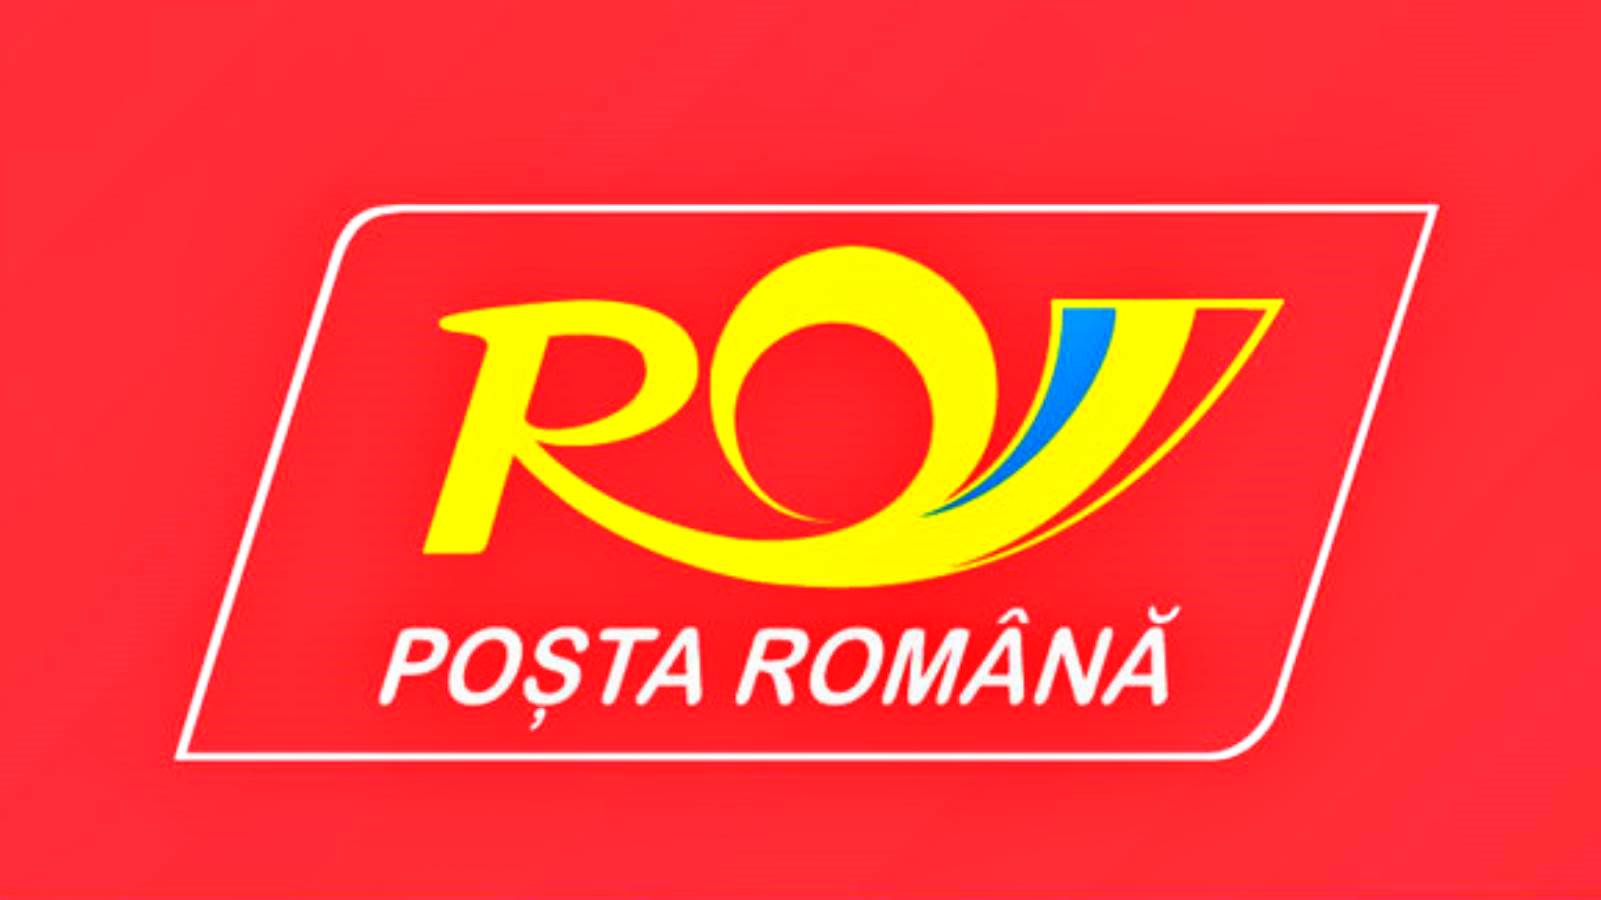 Posta Rumania anuncia cambios importantes en los pasaportes rumanos